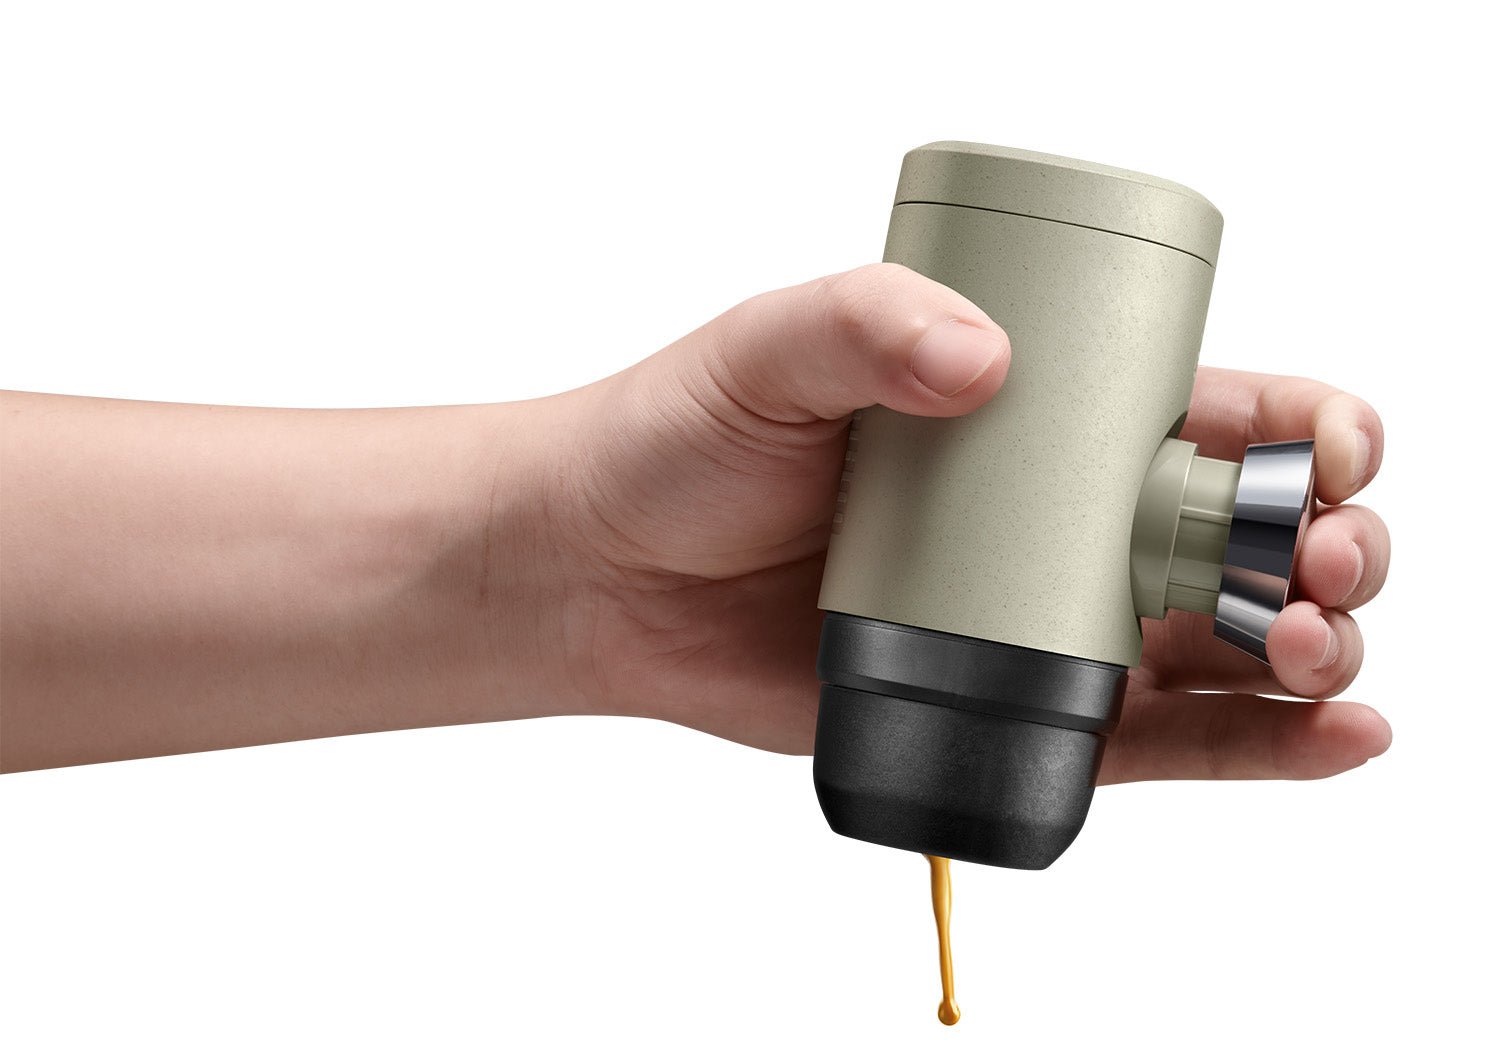 Espressor portabil, manual, pentru cafea, cu capsule, WACACO Minipresso NS2, compatibil NESPRESSO - CampShop.ro